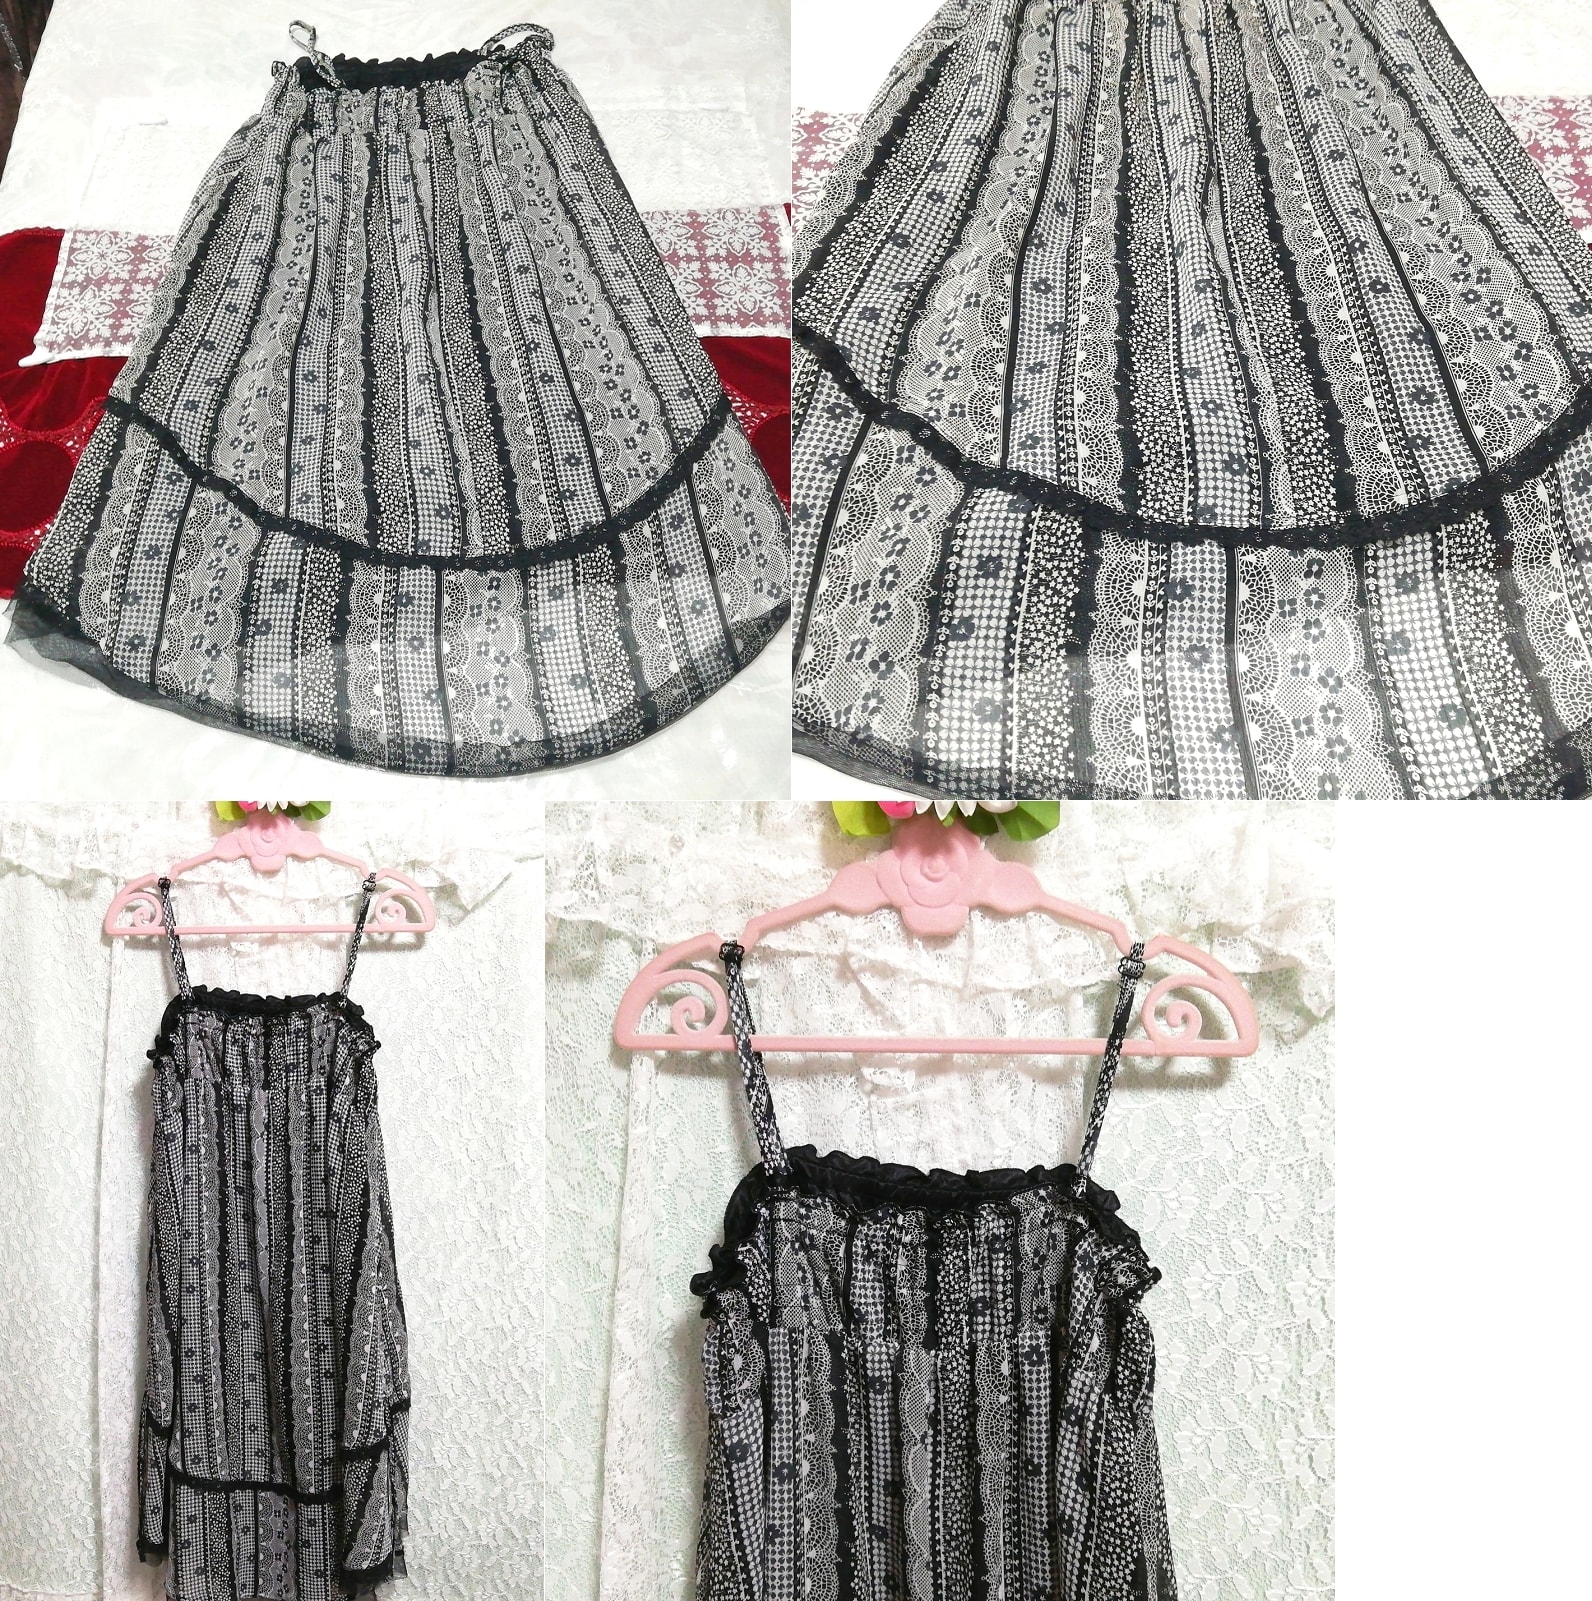 Black and white floral pattern chiffon negligee nightgown nightwear camisole dress, fashion, ladies' fashion, camisole